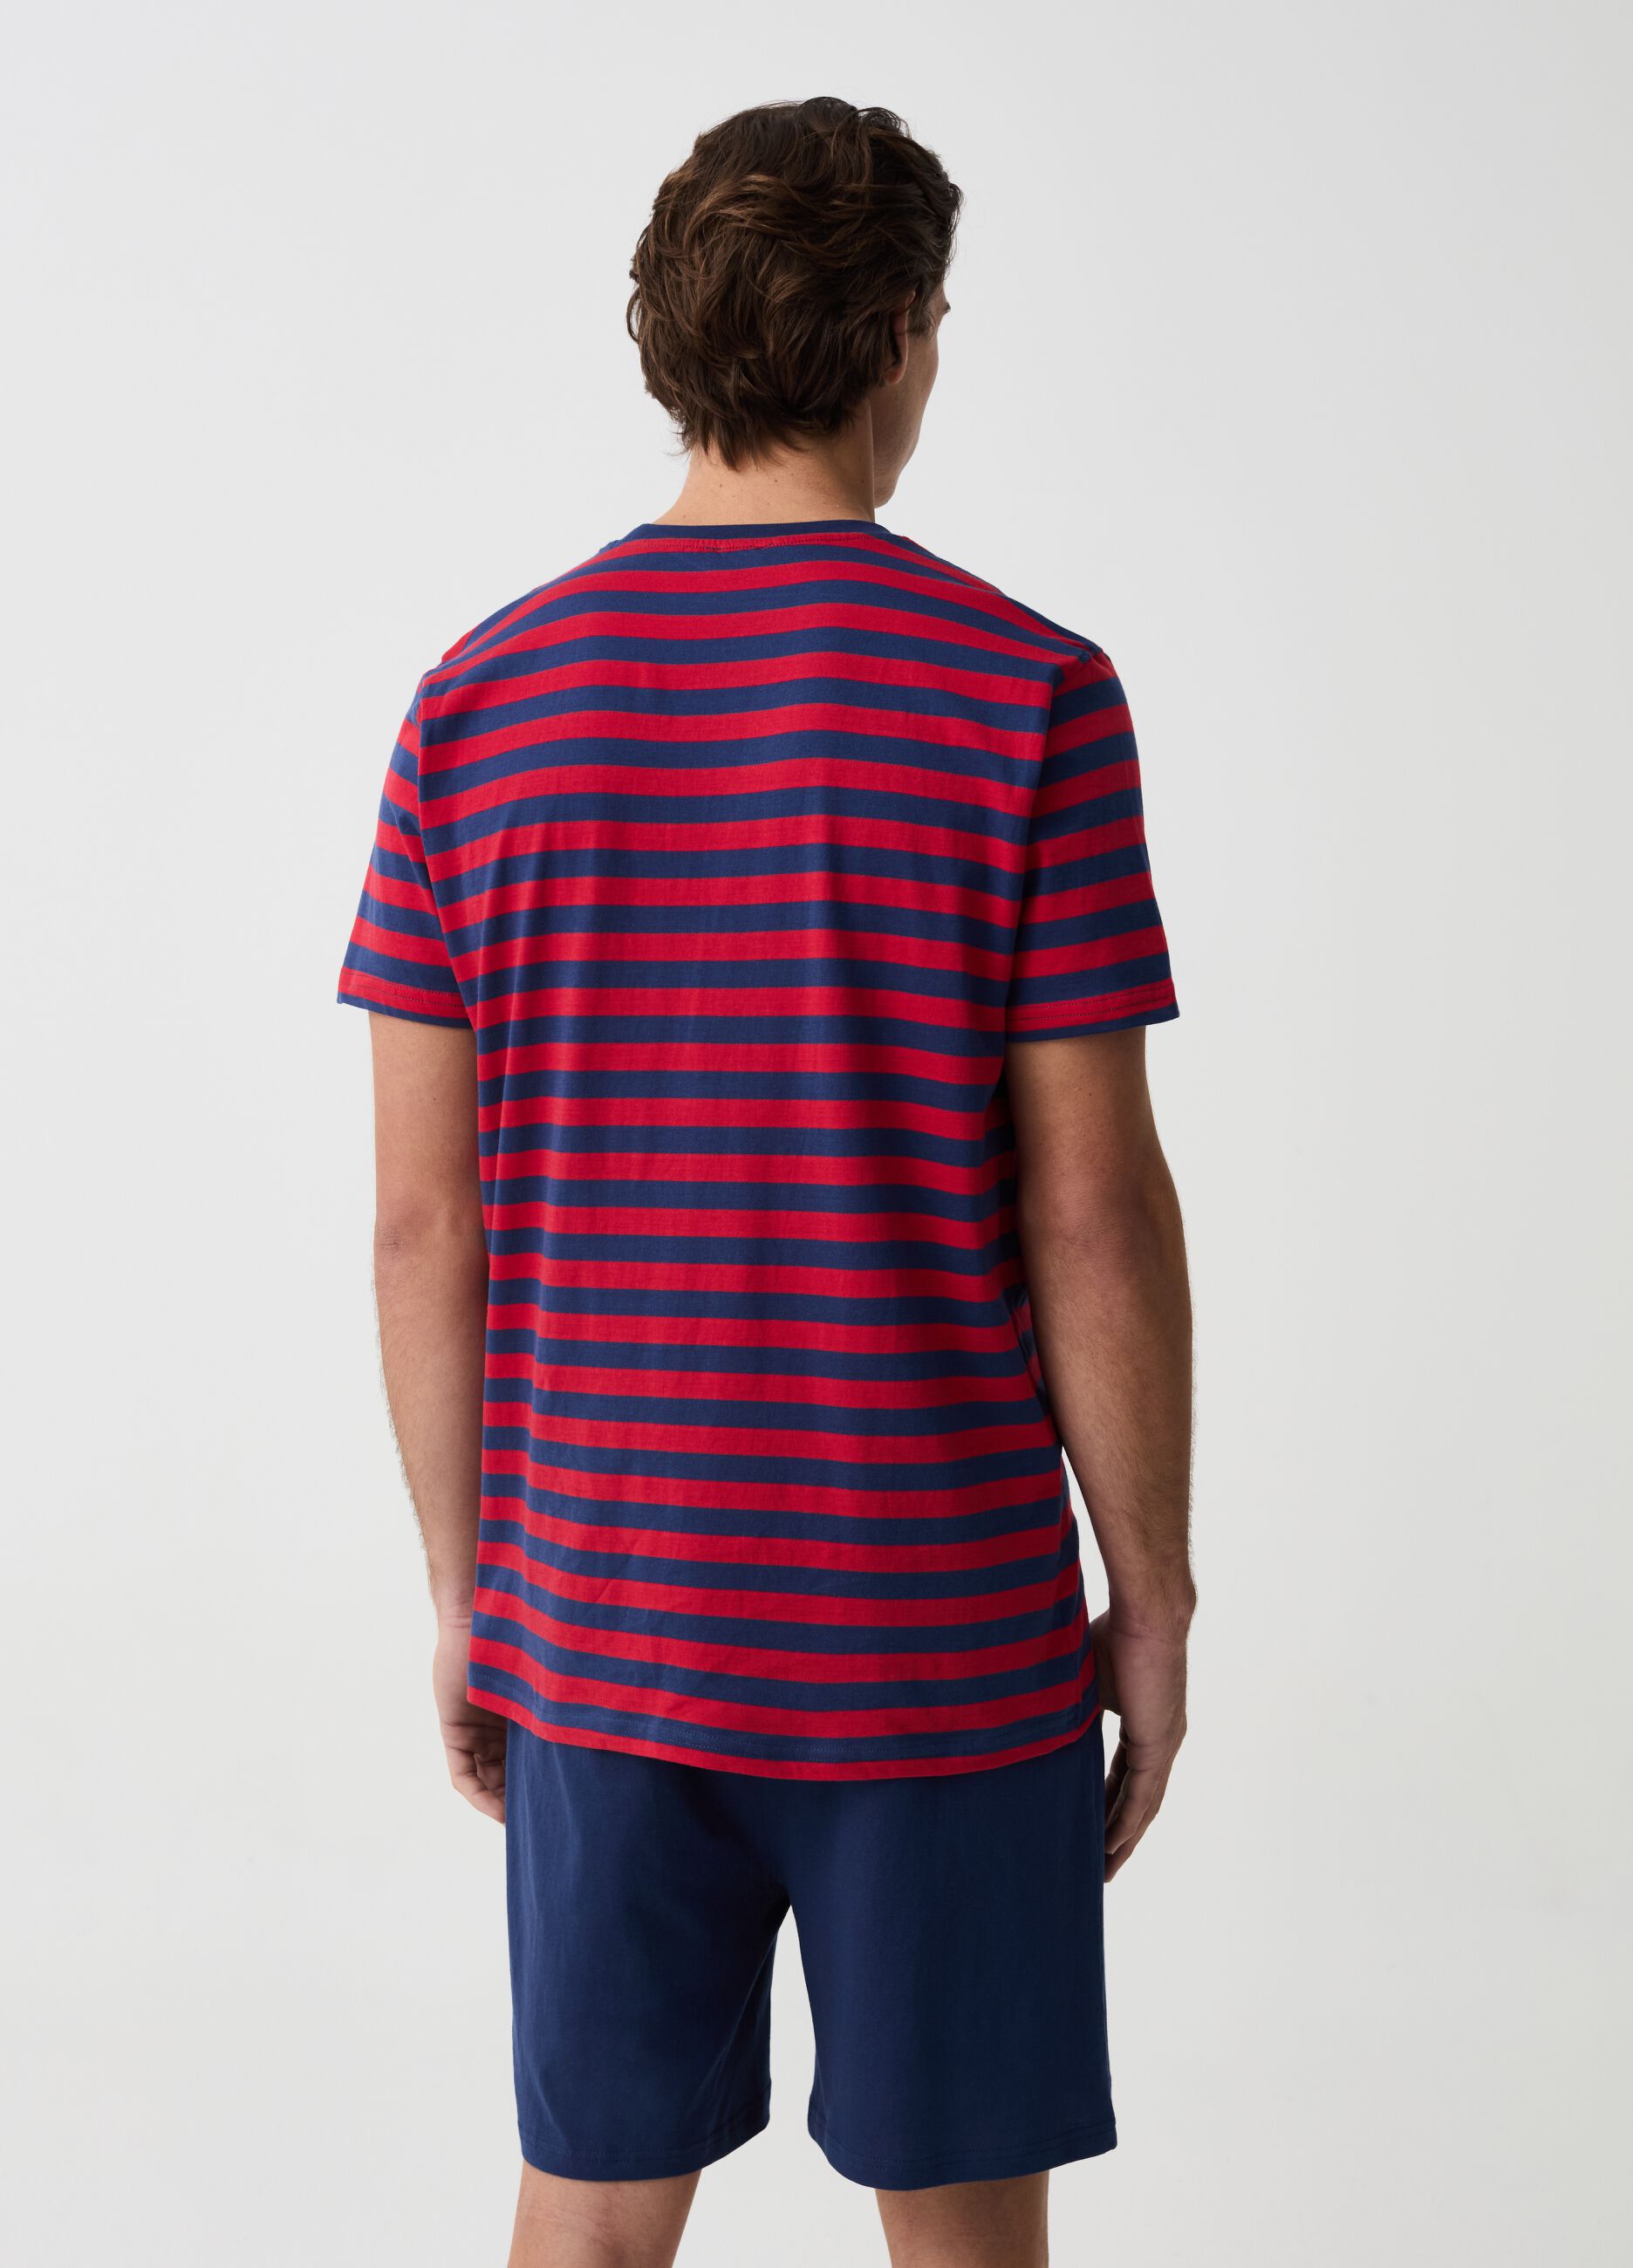 Short pyjama top with striped pattern